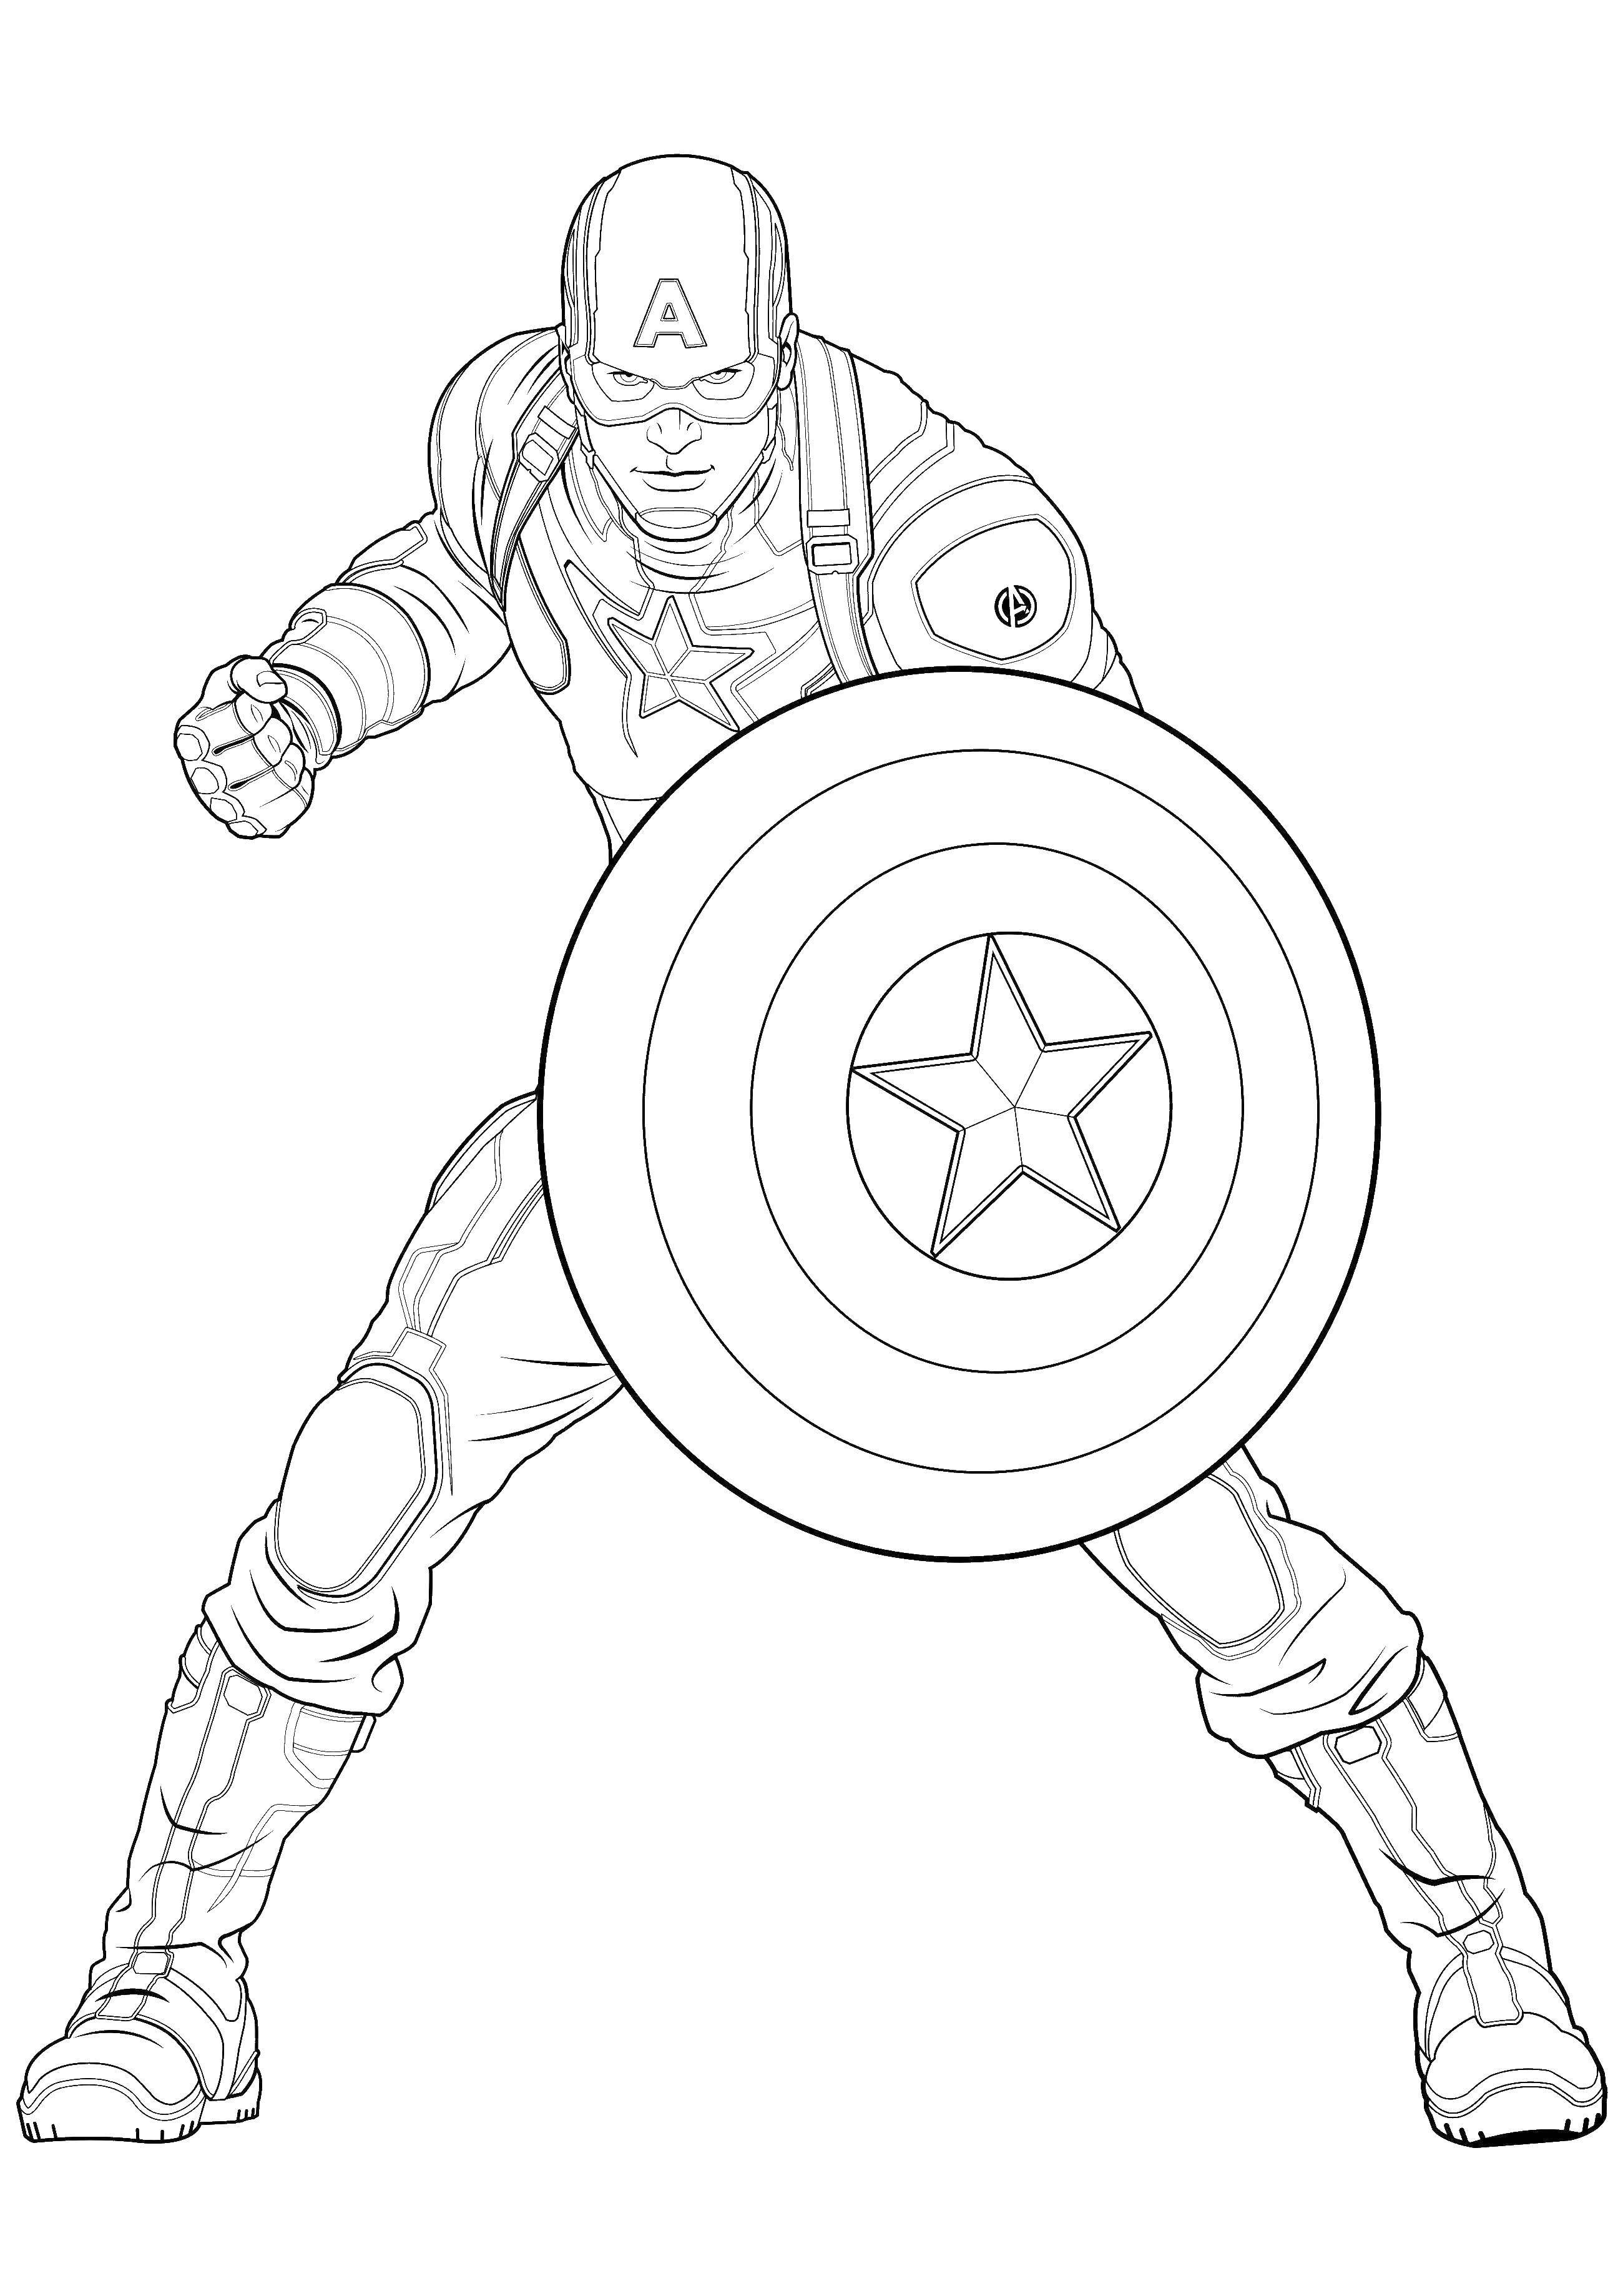 Coloring Captain America. Category captain America. Tags:  captain America.